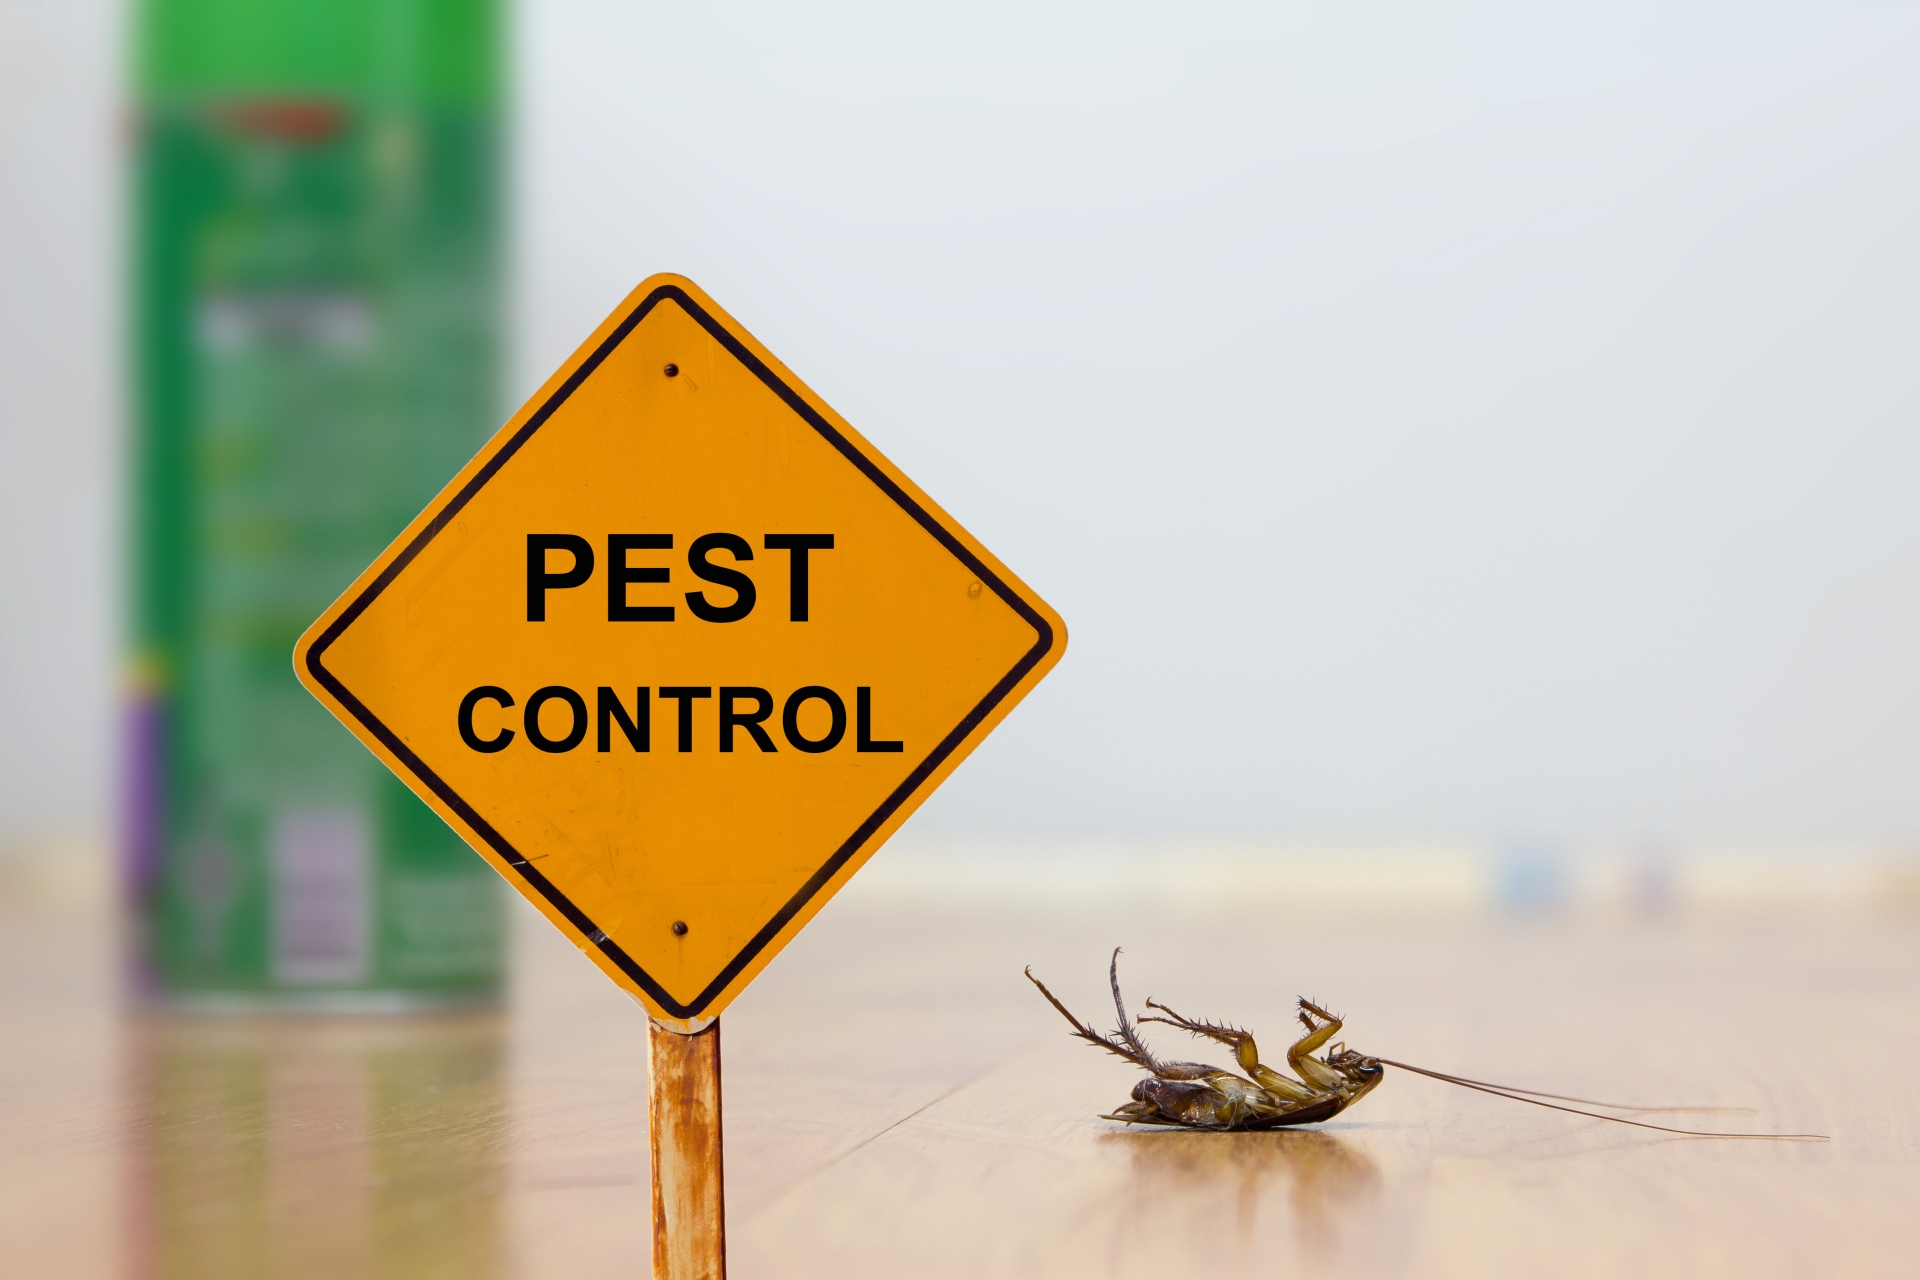 24 Hour Pest Control, Pest Control in North Harrow, South Harrow, West Harrow, HA2. Call Now 020 8166 9746